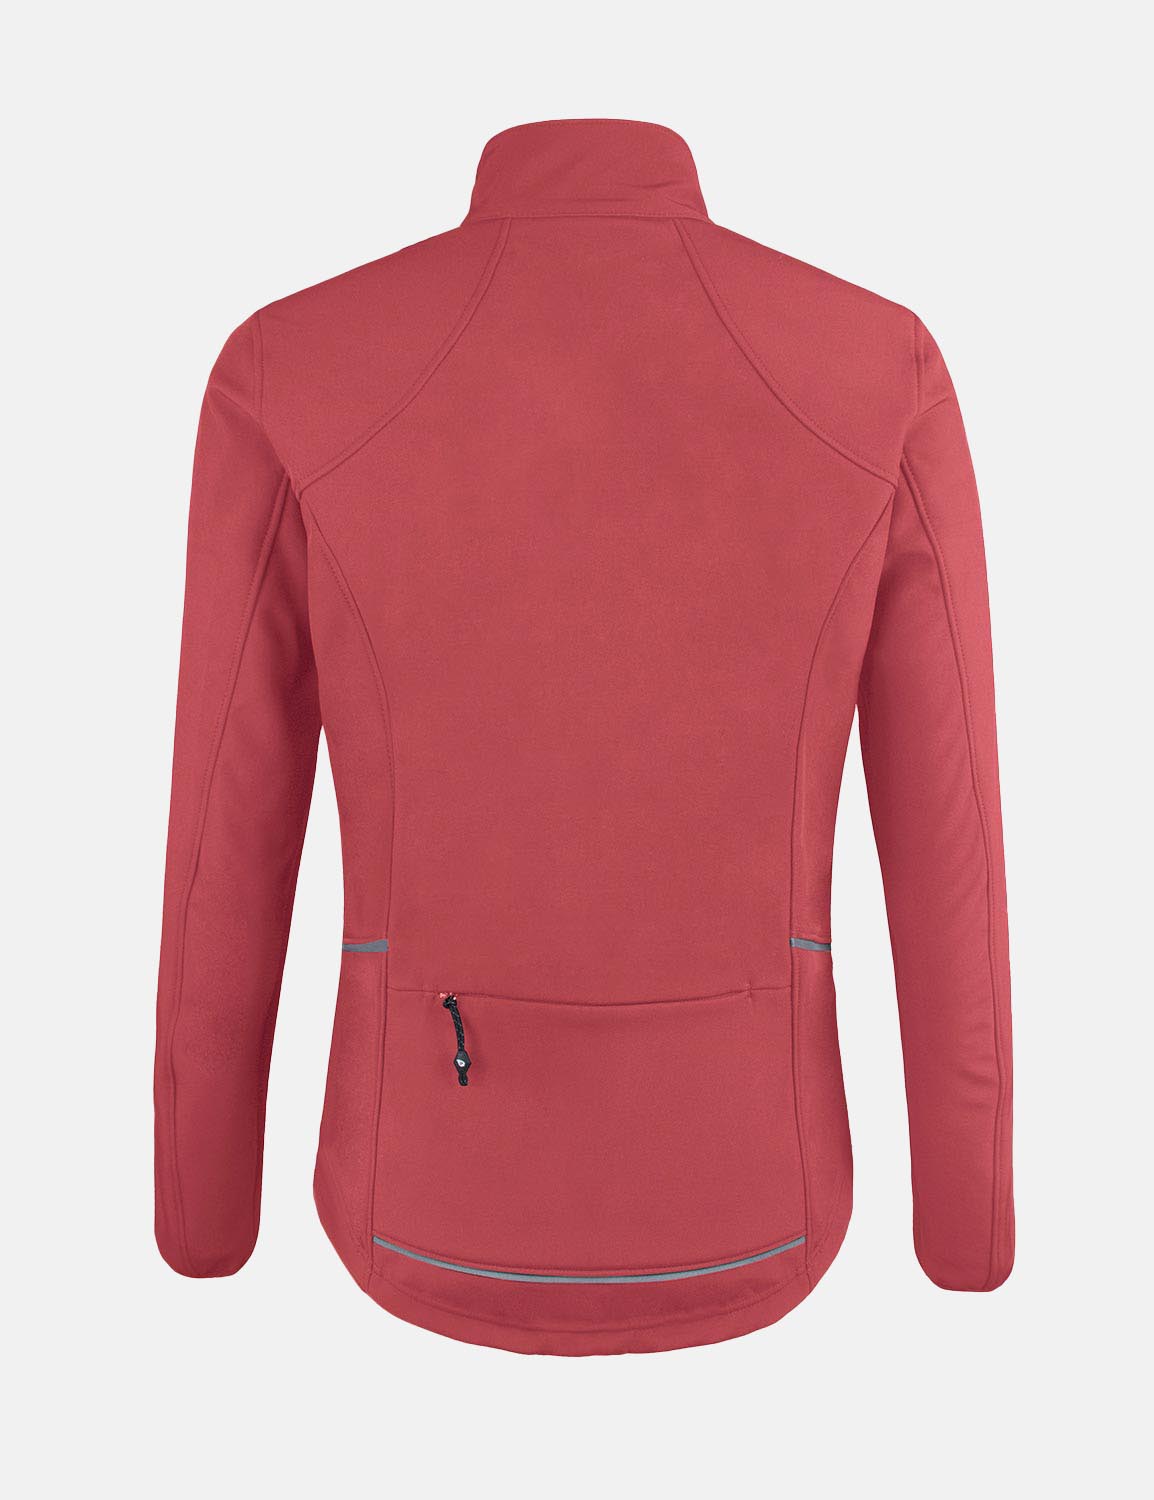 Baleaf Women's Wind- & Waterproof Thermal Long Sleeved Cycling Jacket aaa464 Poppy Red Back